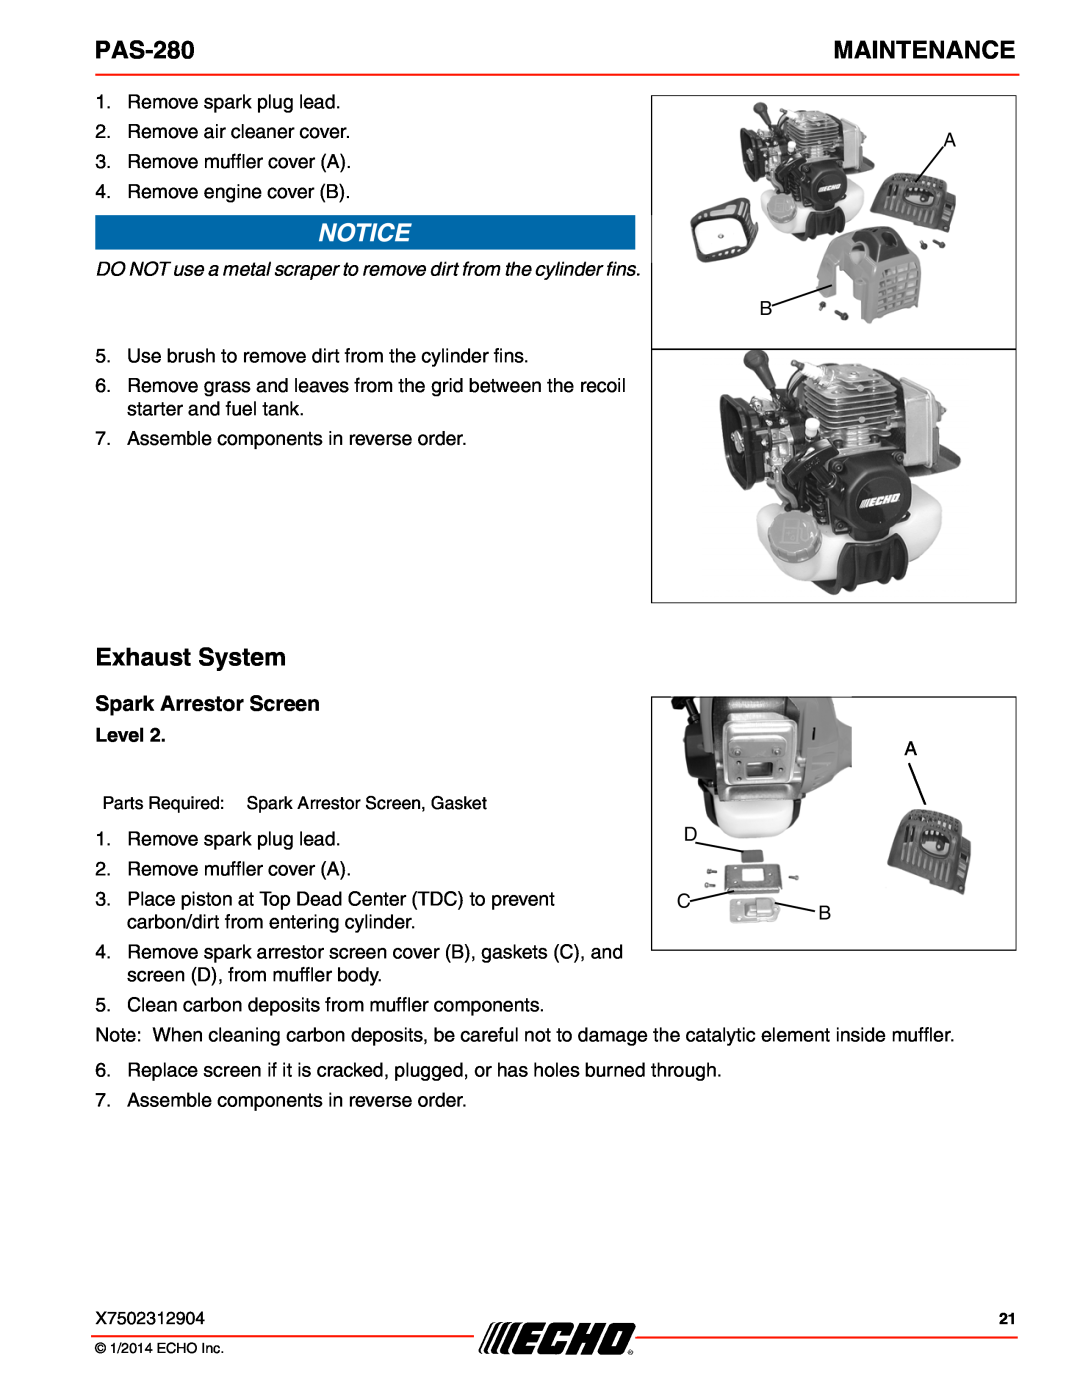 Echo PAS-280 specifications Exhaust System, Spark Arrestor Screen, Maintenance, Level 